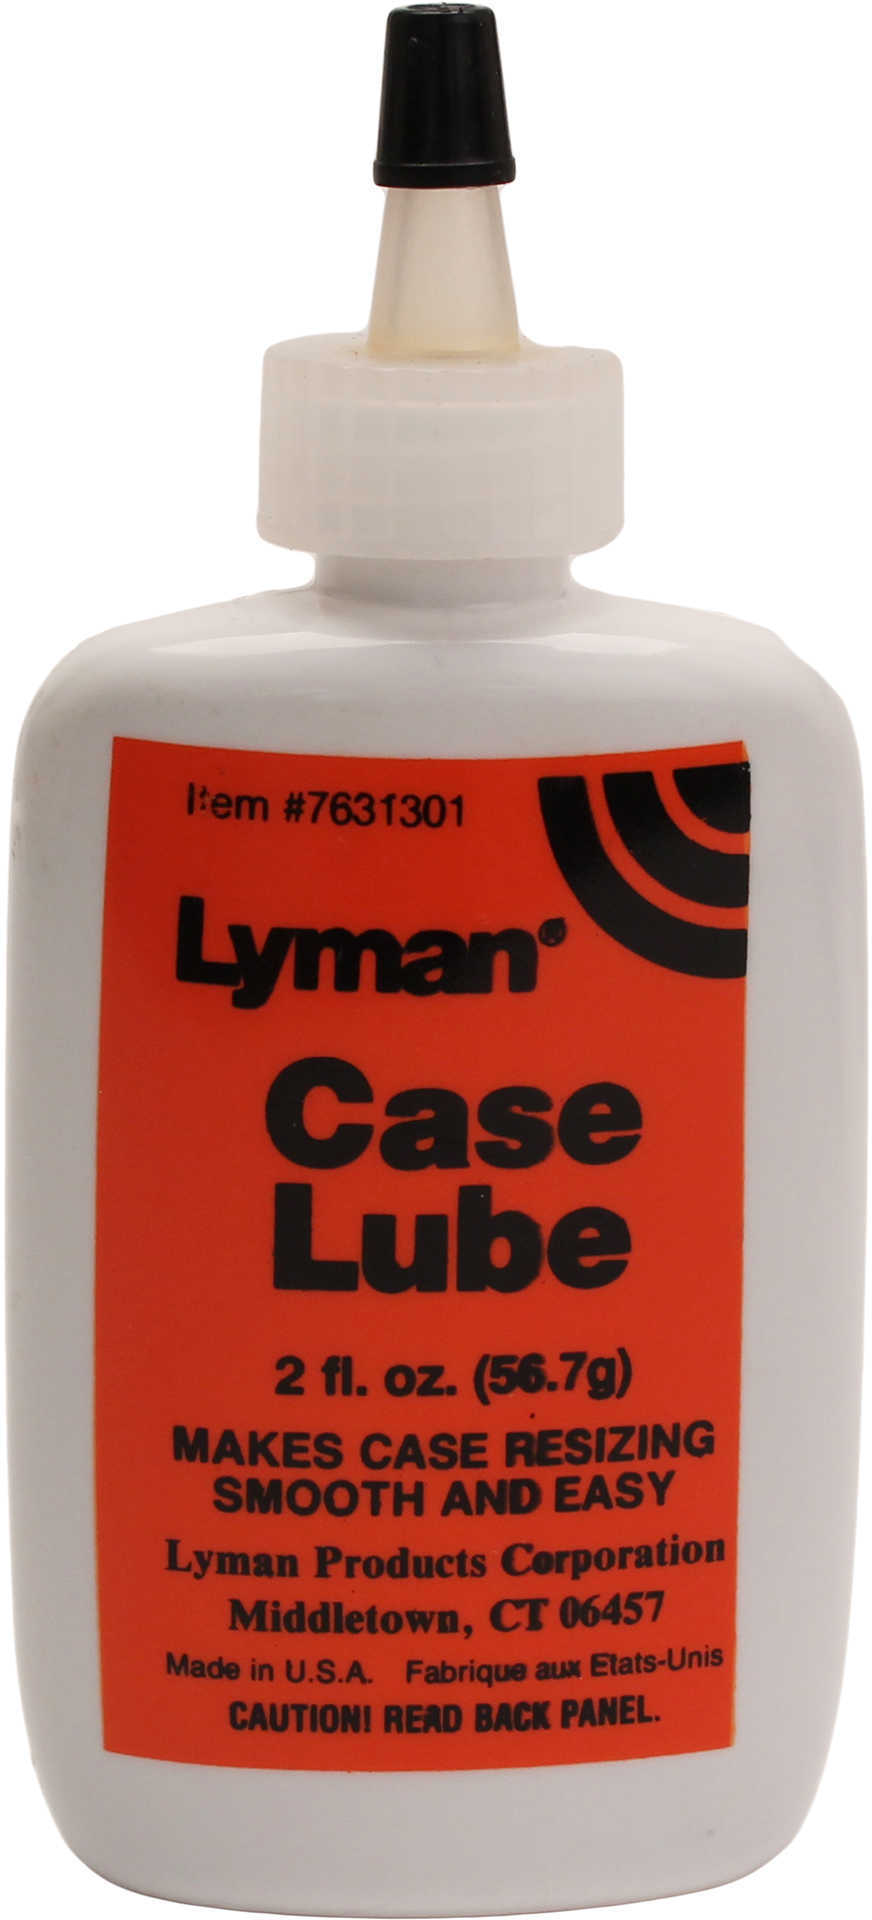 Lyman Case Lubricant 2 Oz. Bottle